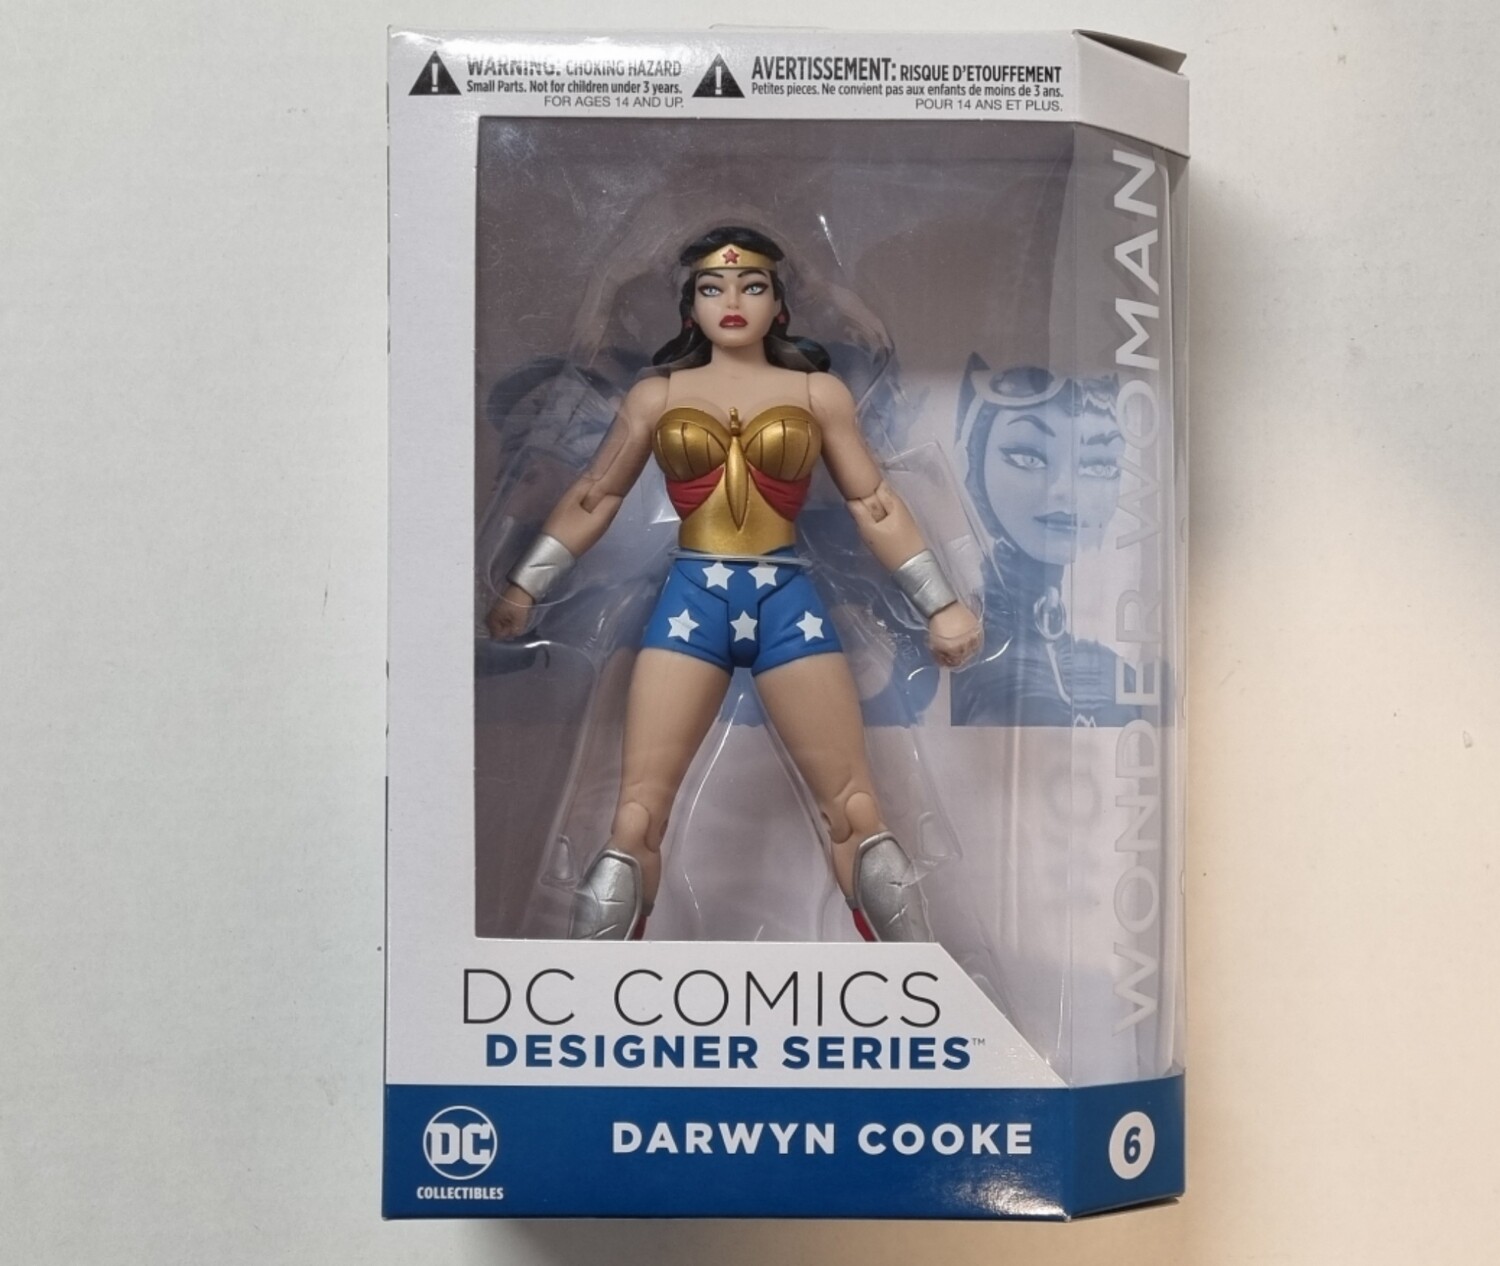 Actiefiguur, Wonder Woman. DC Comics, Designer Series, Darwyn Cooke